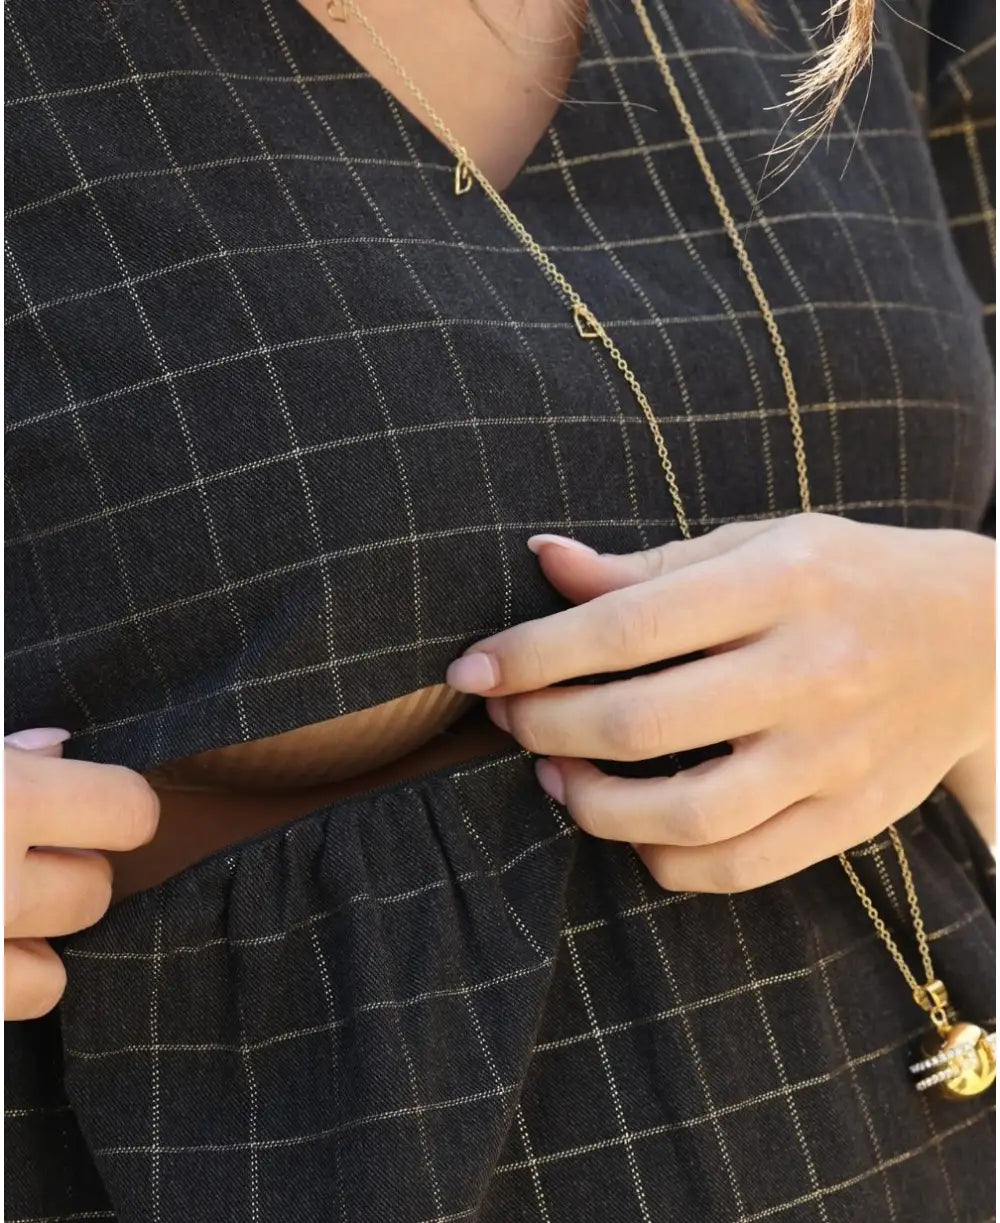 Short pregnancy and nursing dress Janis grey lurex - Robes